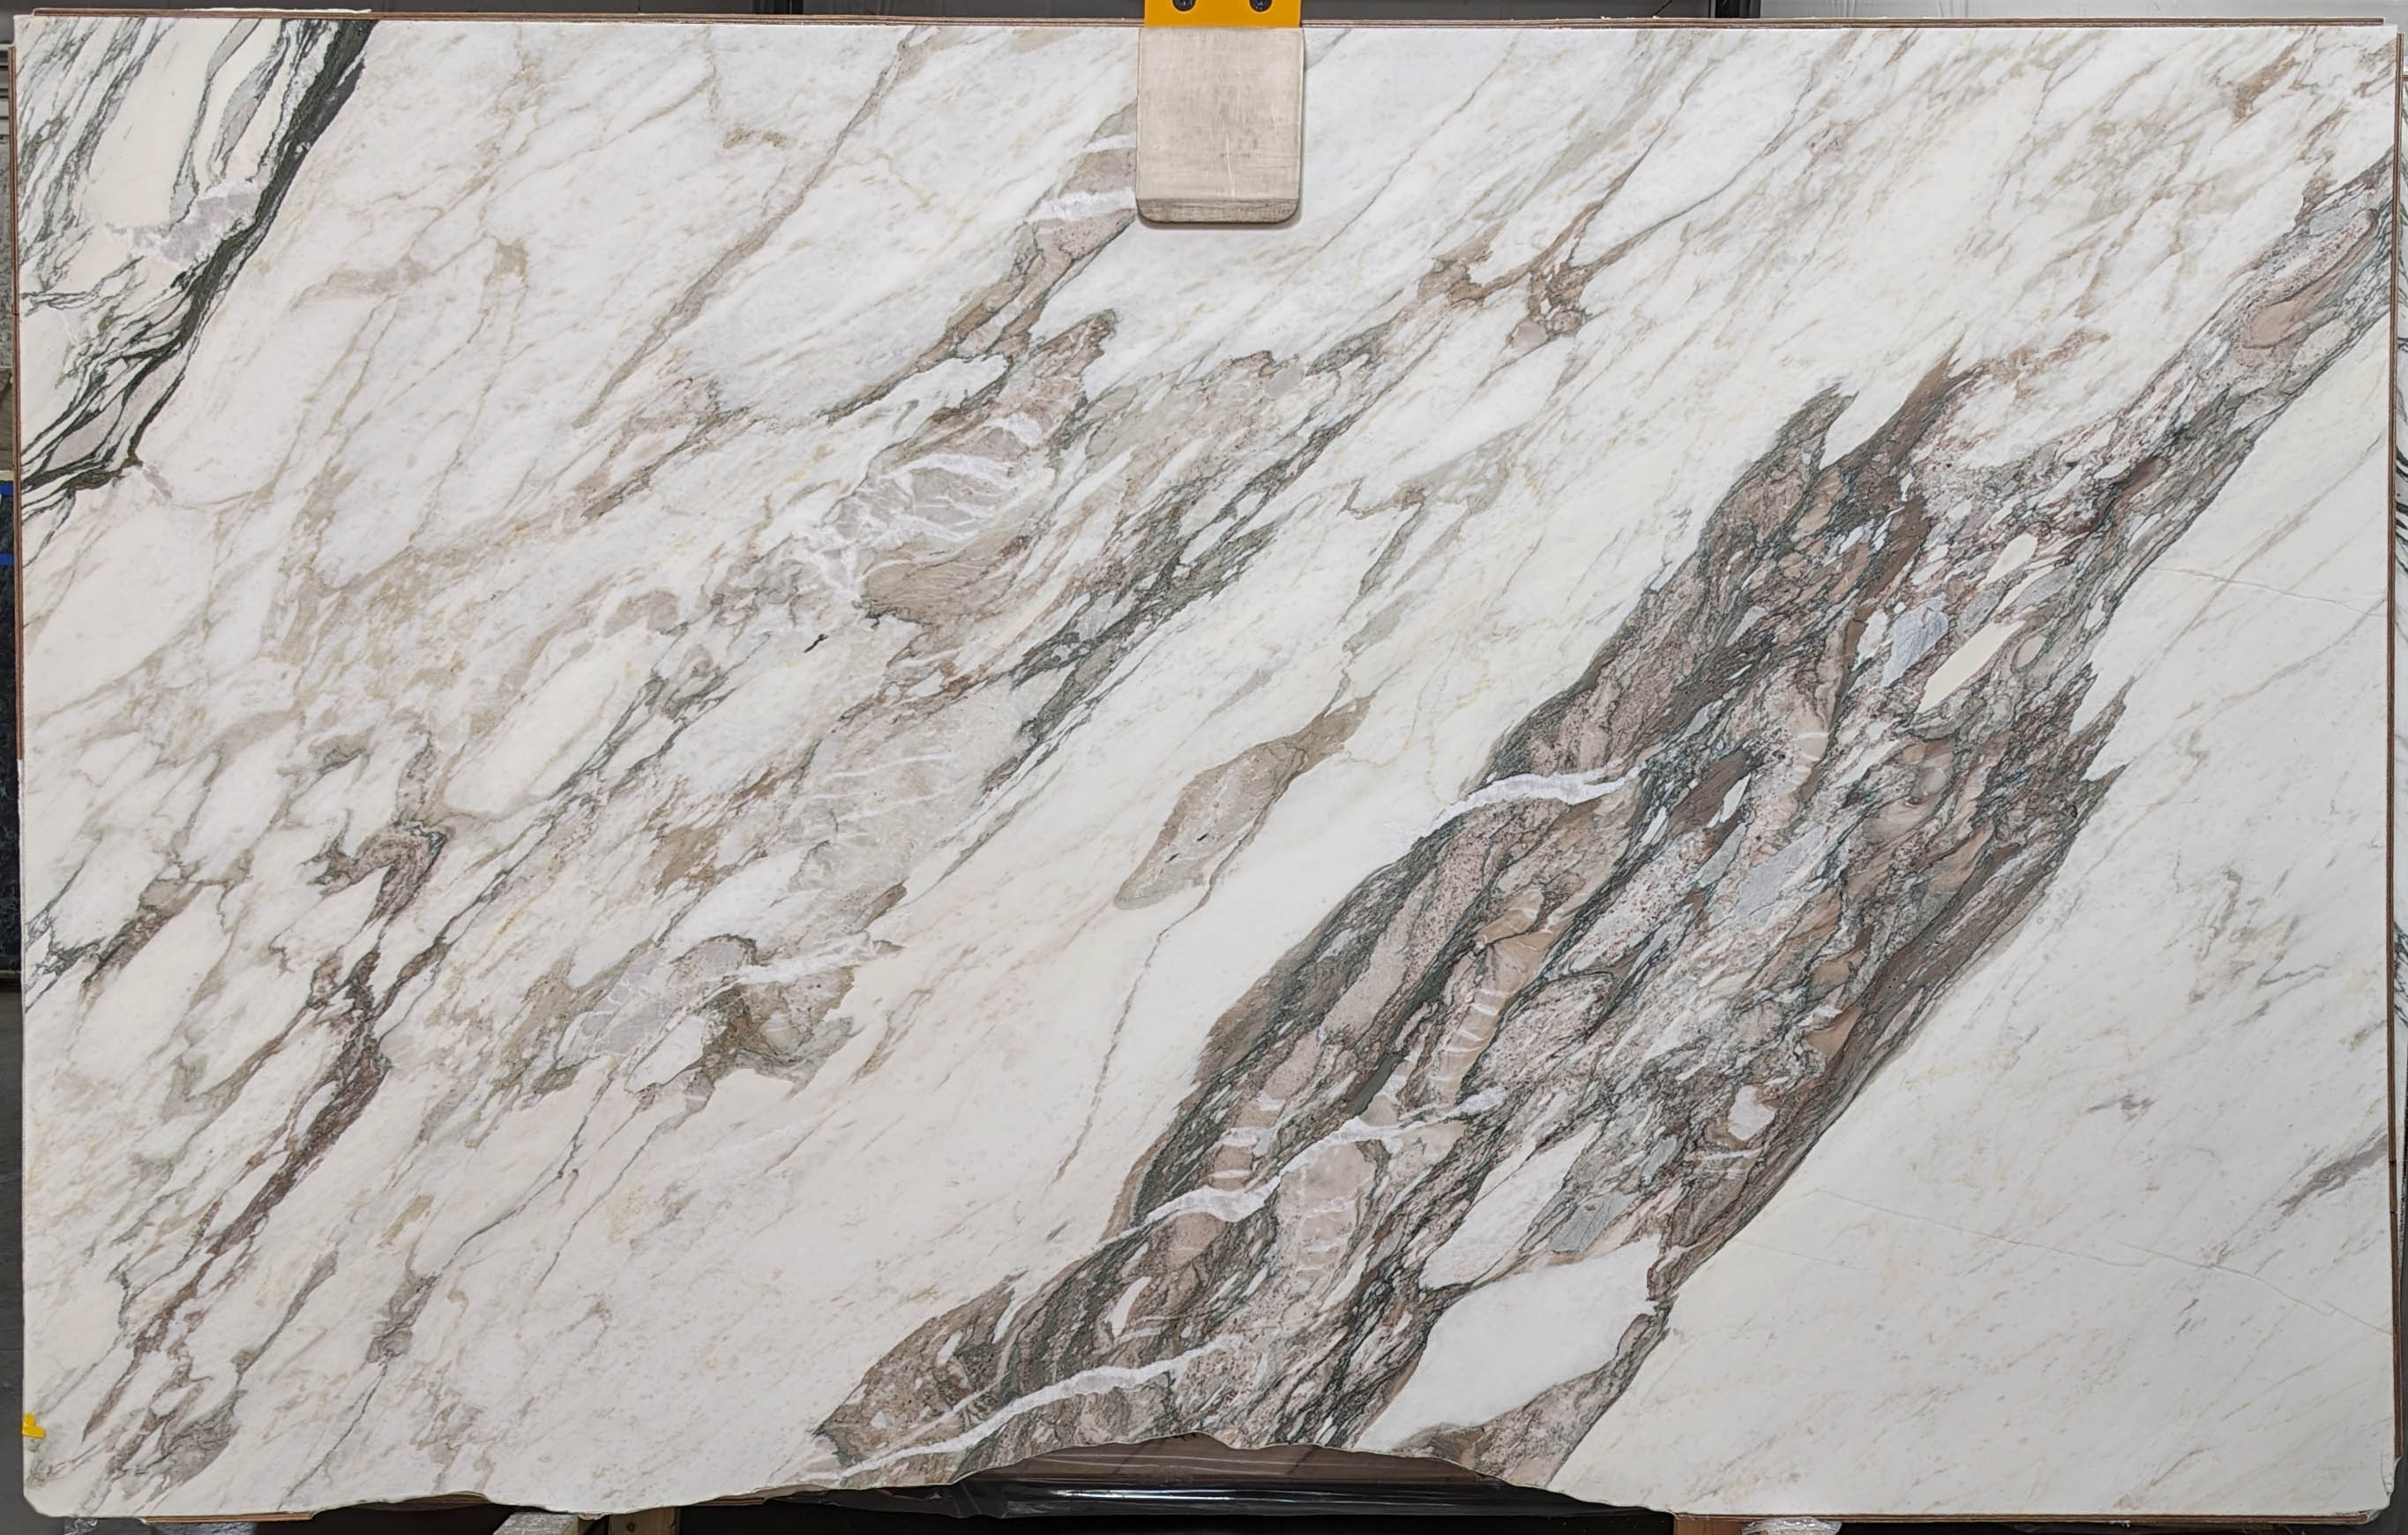  Calacatta Imperiale Marble Slab 3/4  Honed Stone - 4028#07 -  70x118 